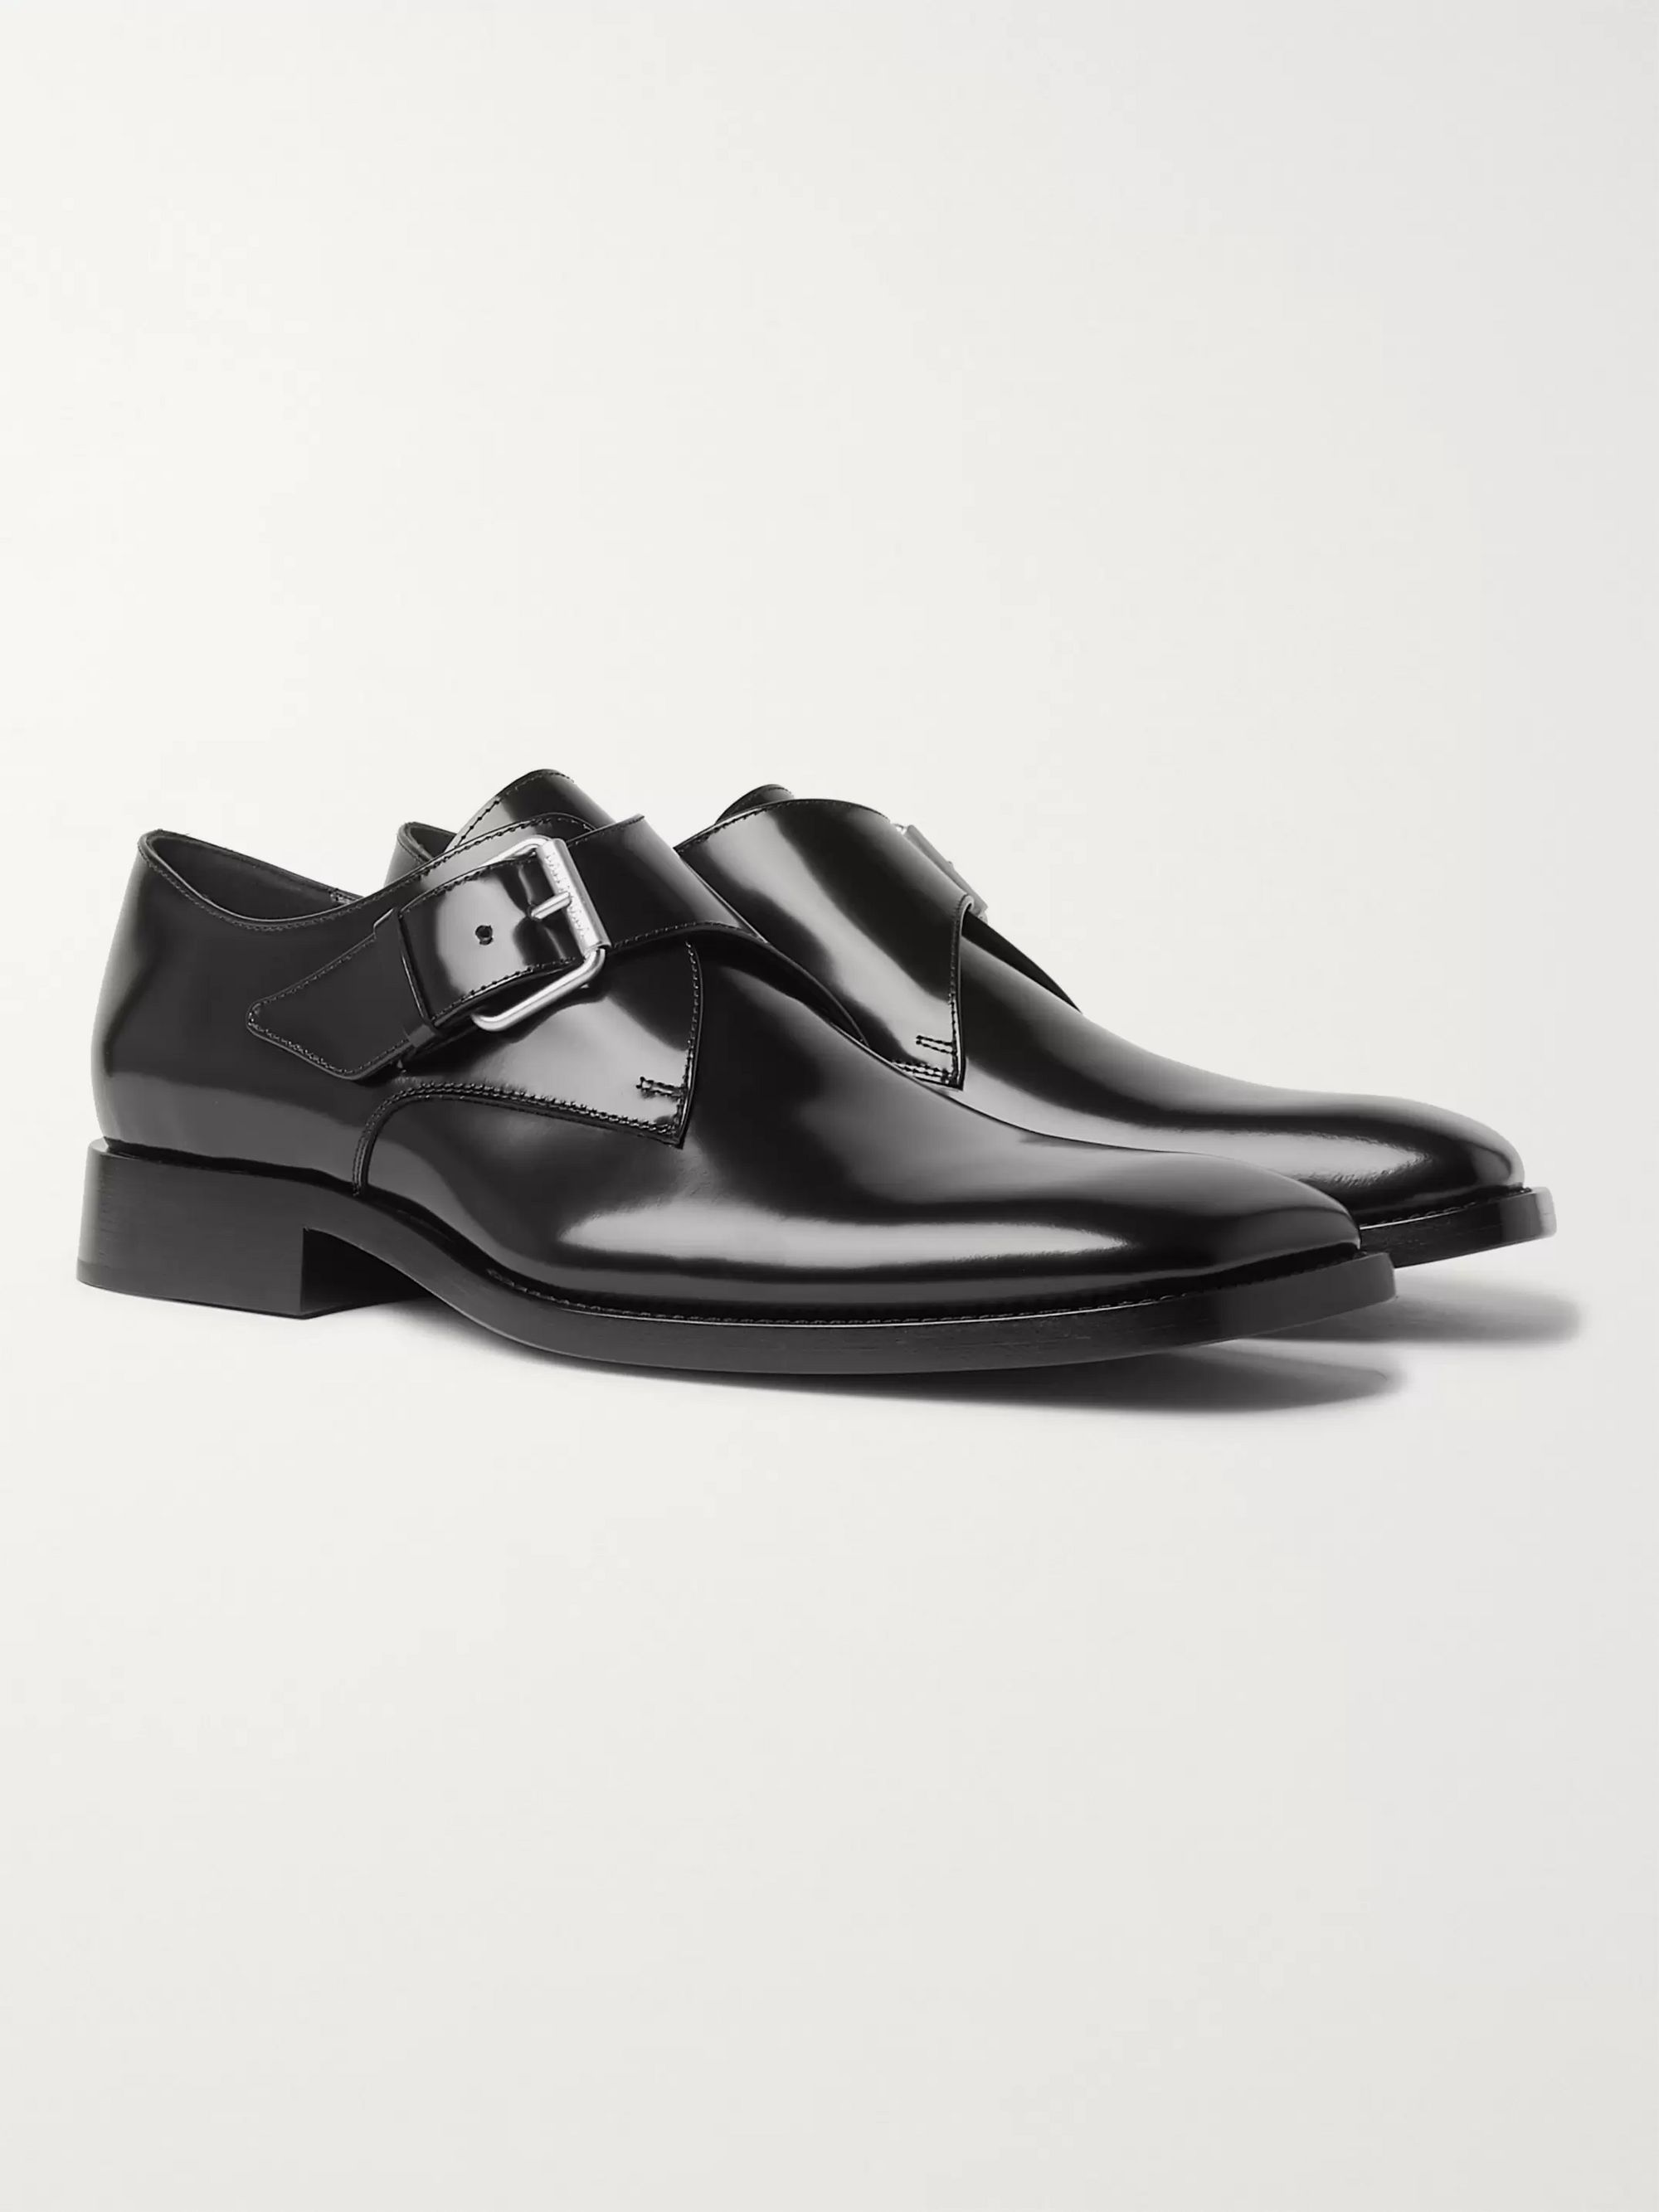 Black Patent-Leather Monk-Strap Shoes 